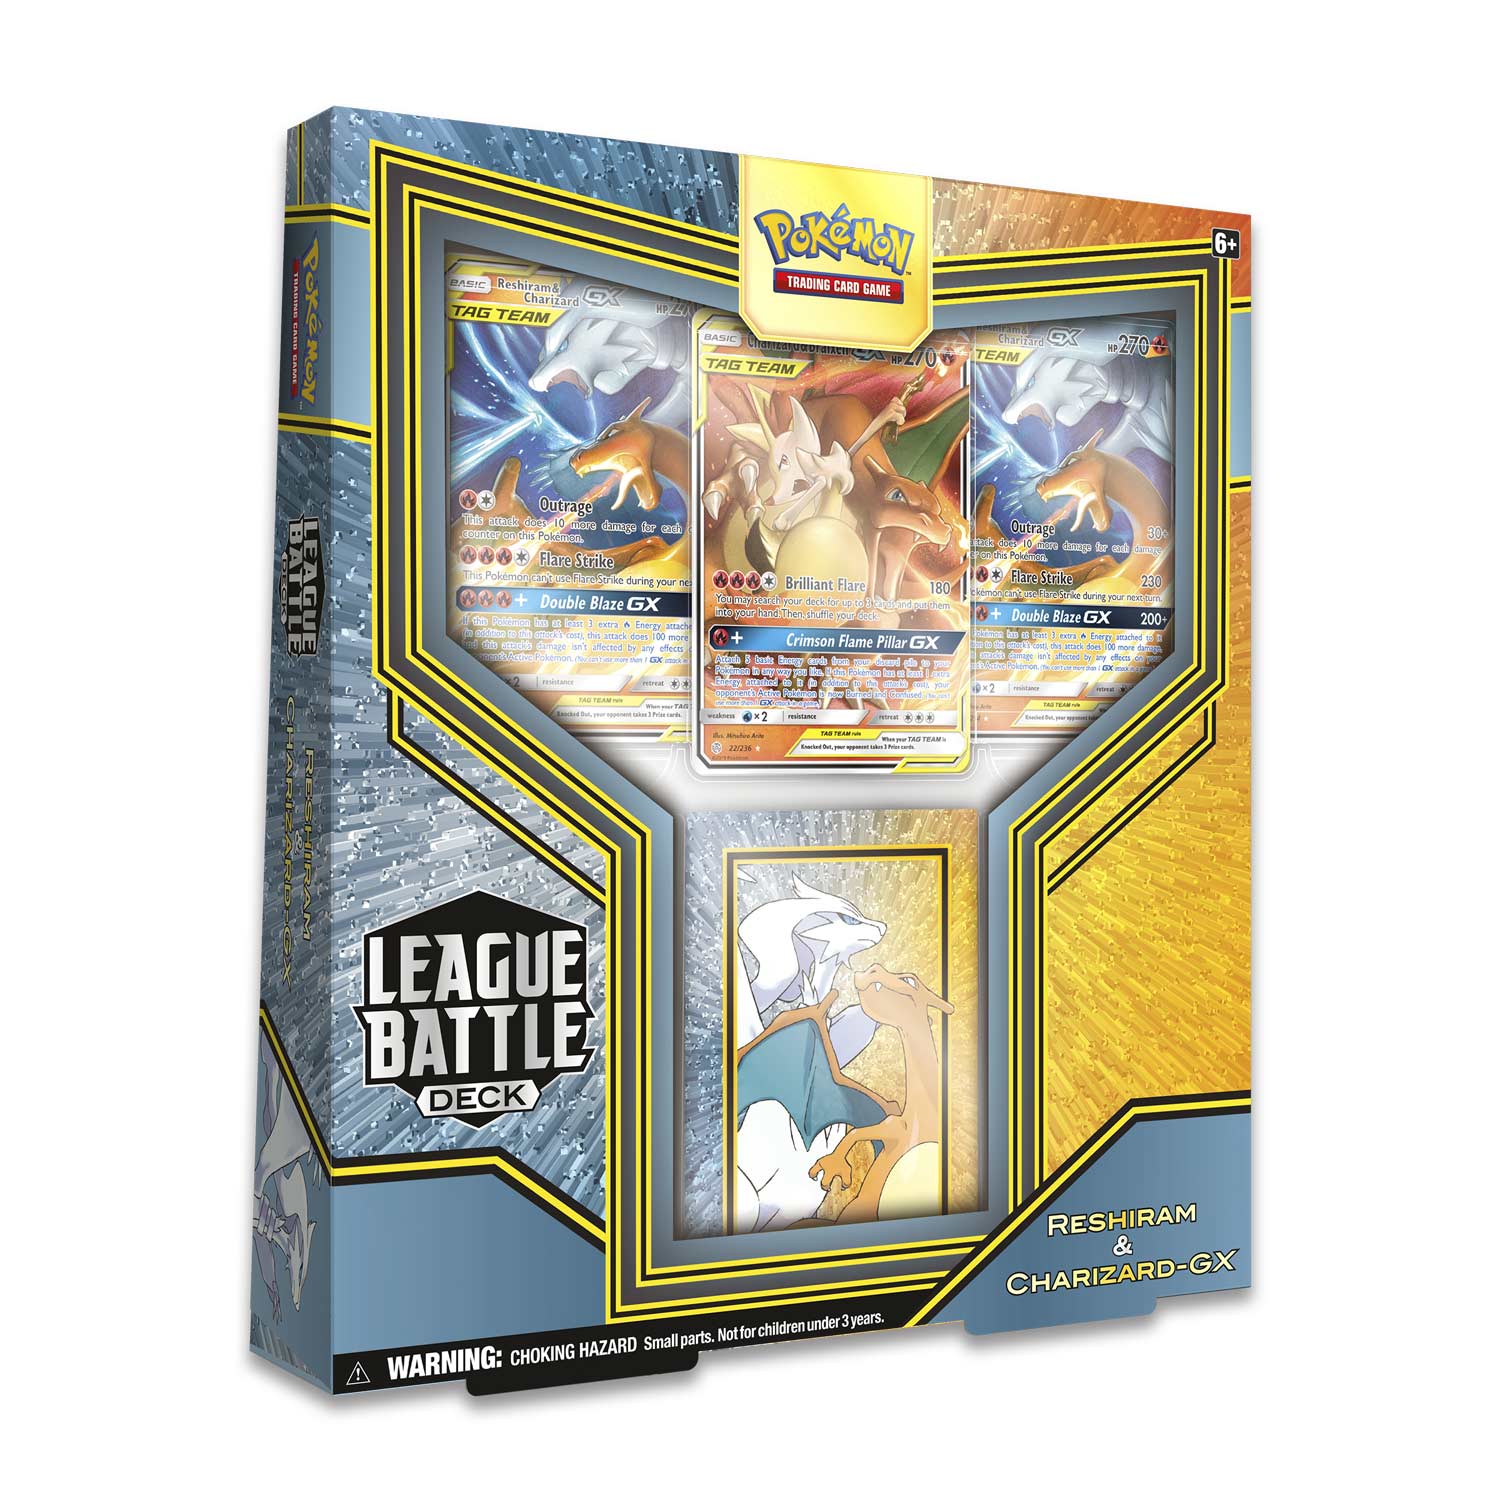 Pokémon TCG: League Battle Decks -  Reshiram & Charizard-GX - Pikachu & Zekrom-GX